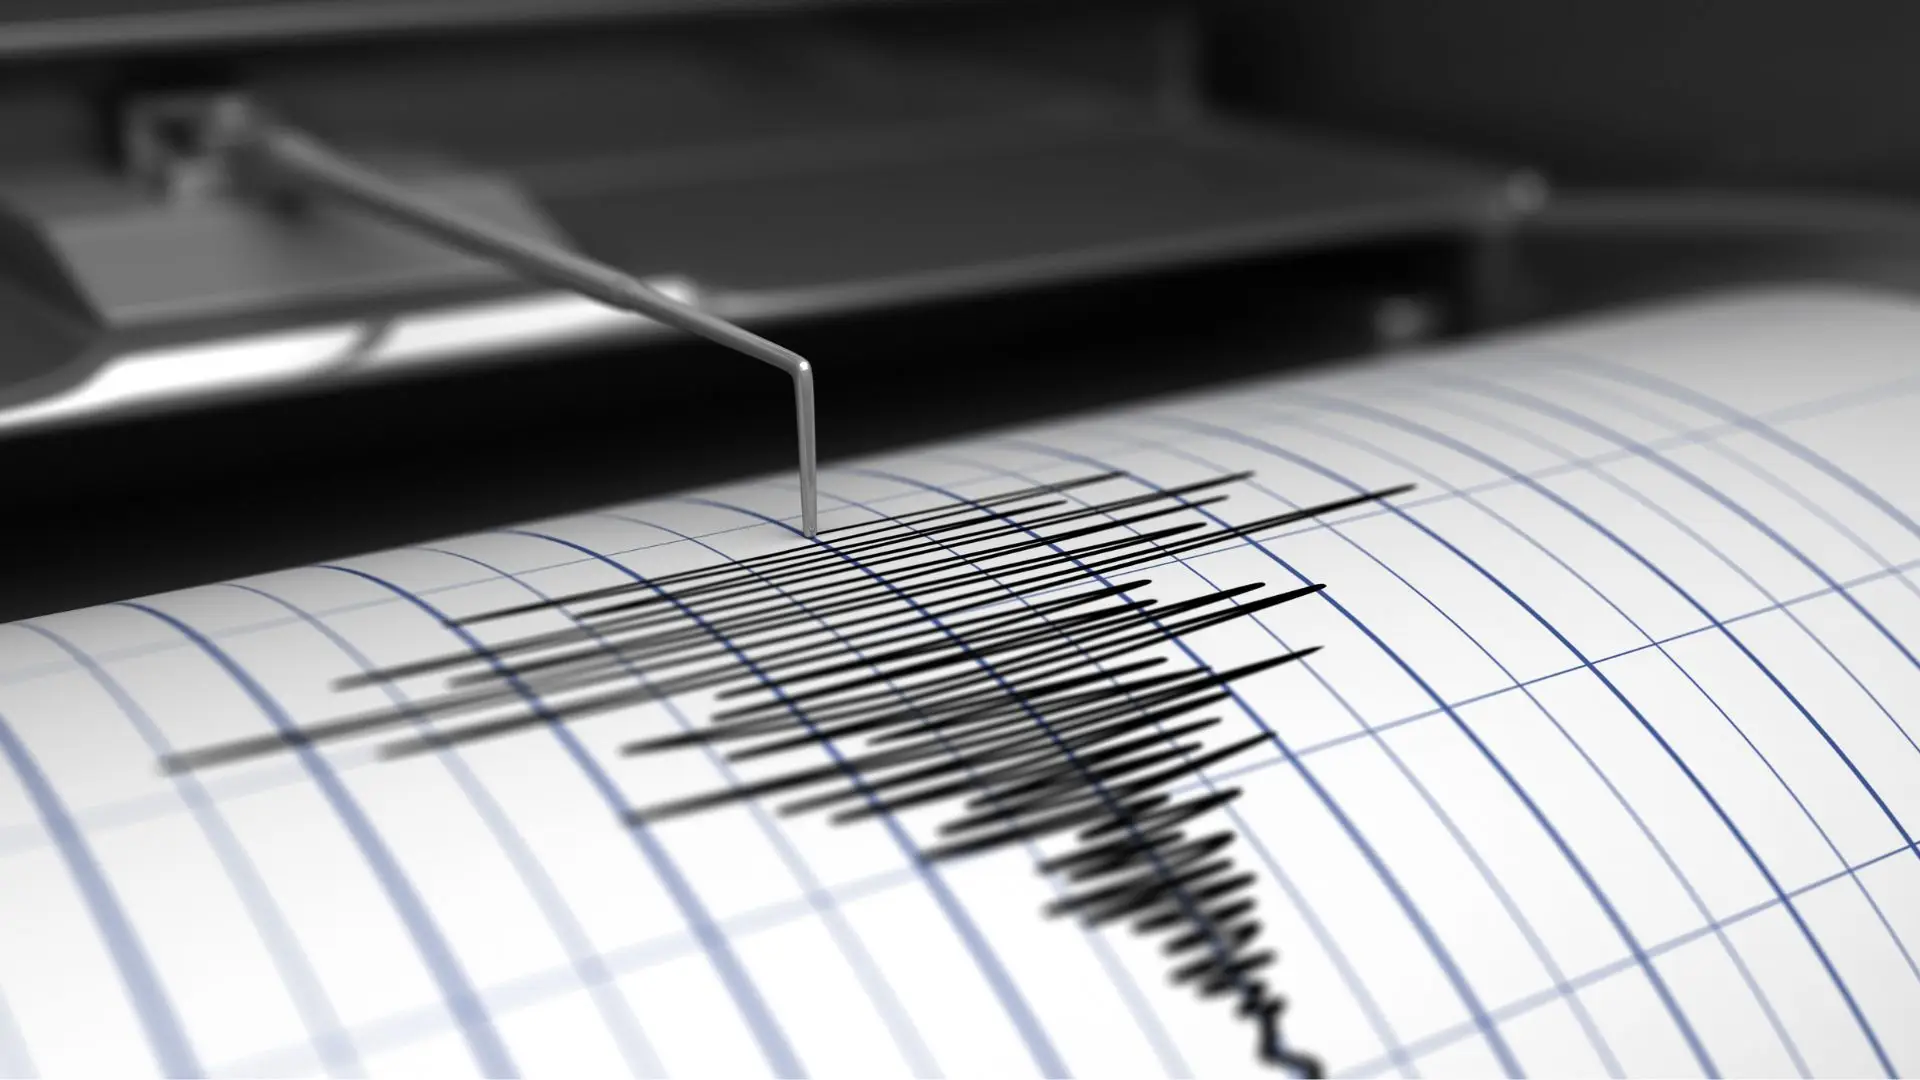 Registado sismo de 3,4 na escala de Richter com epicentro perto do Bombarral